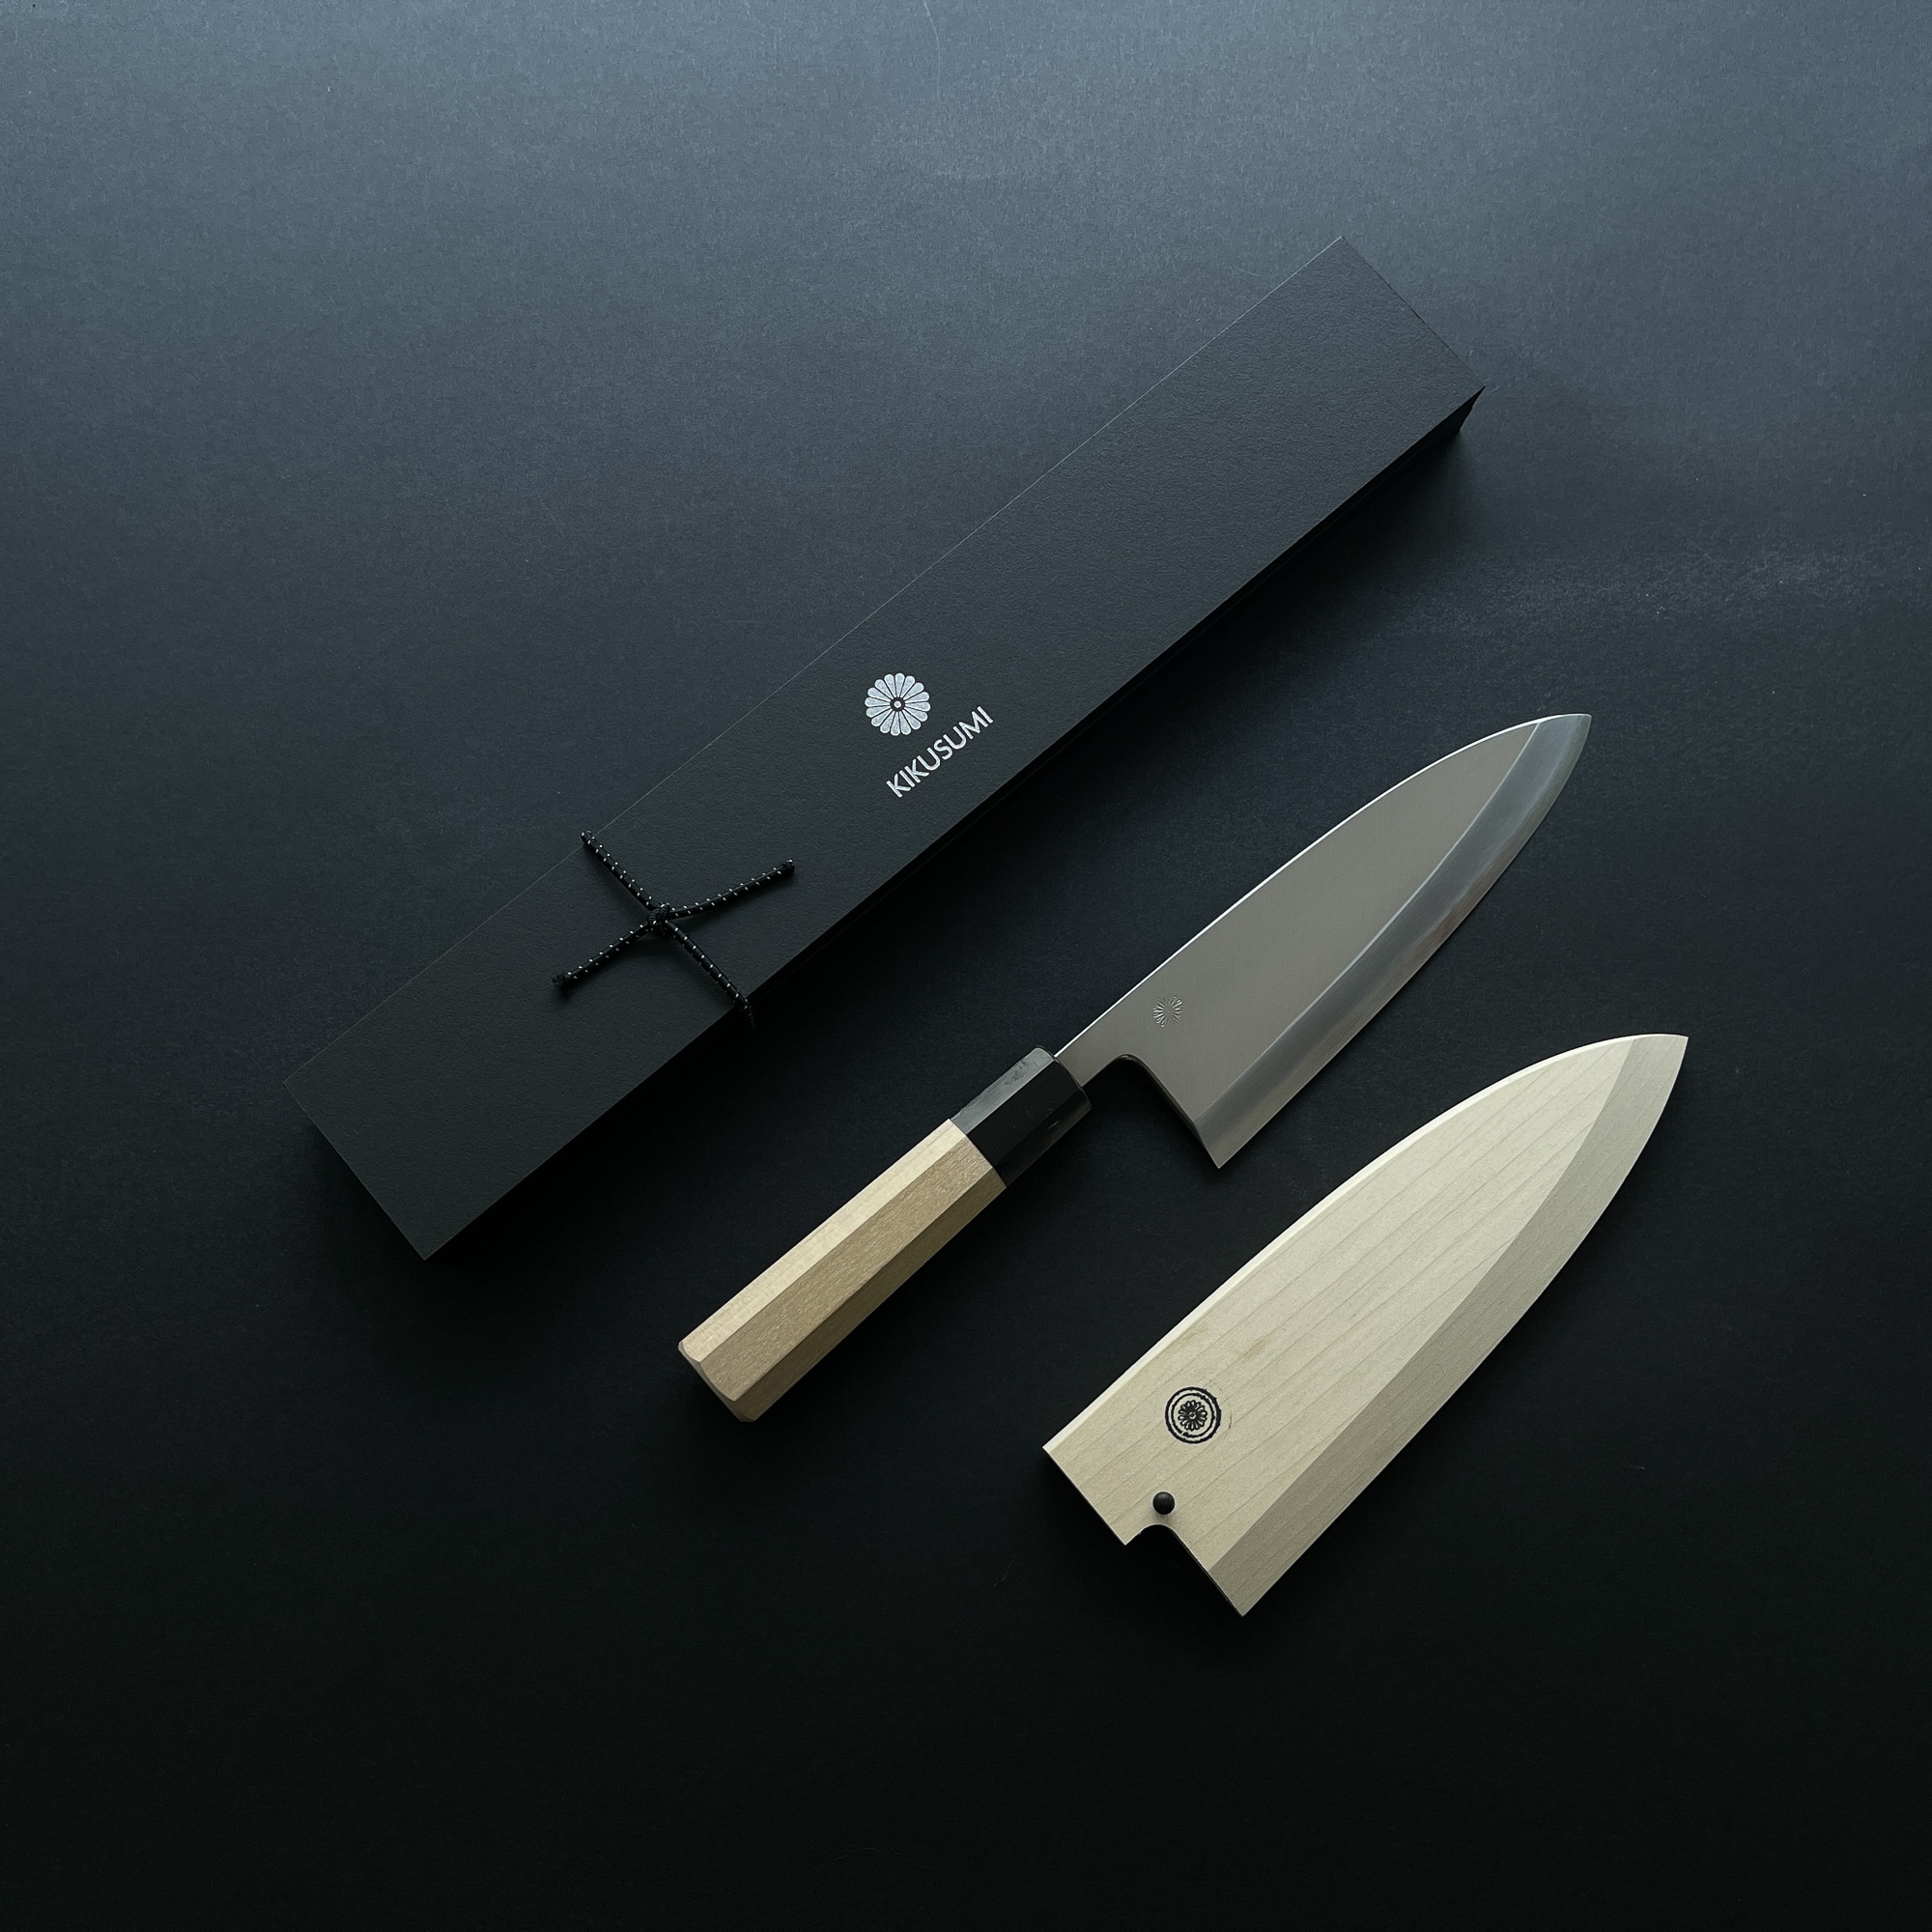 Kikusumi Black Ceramic Collection 7 Piece Chef Knife Gift Set Bundle - SUMI  Black Handle - Kikusumi Knife SHOP